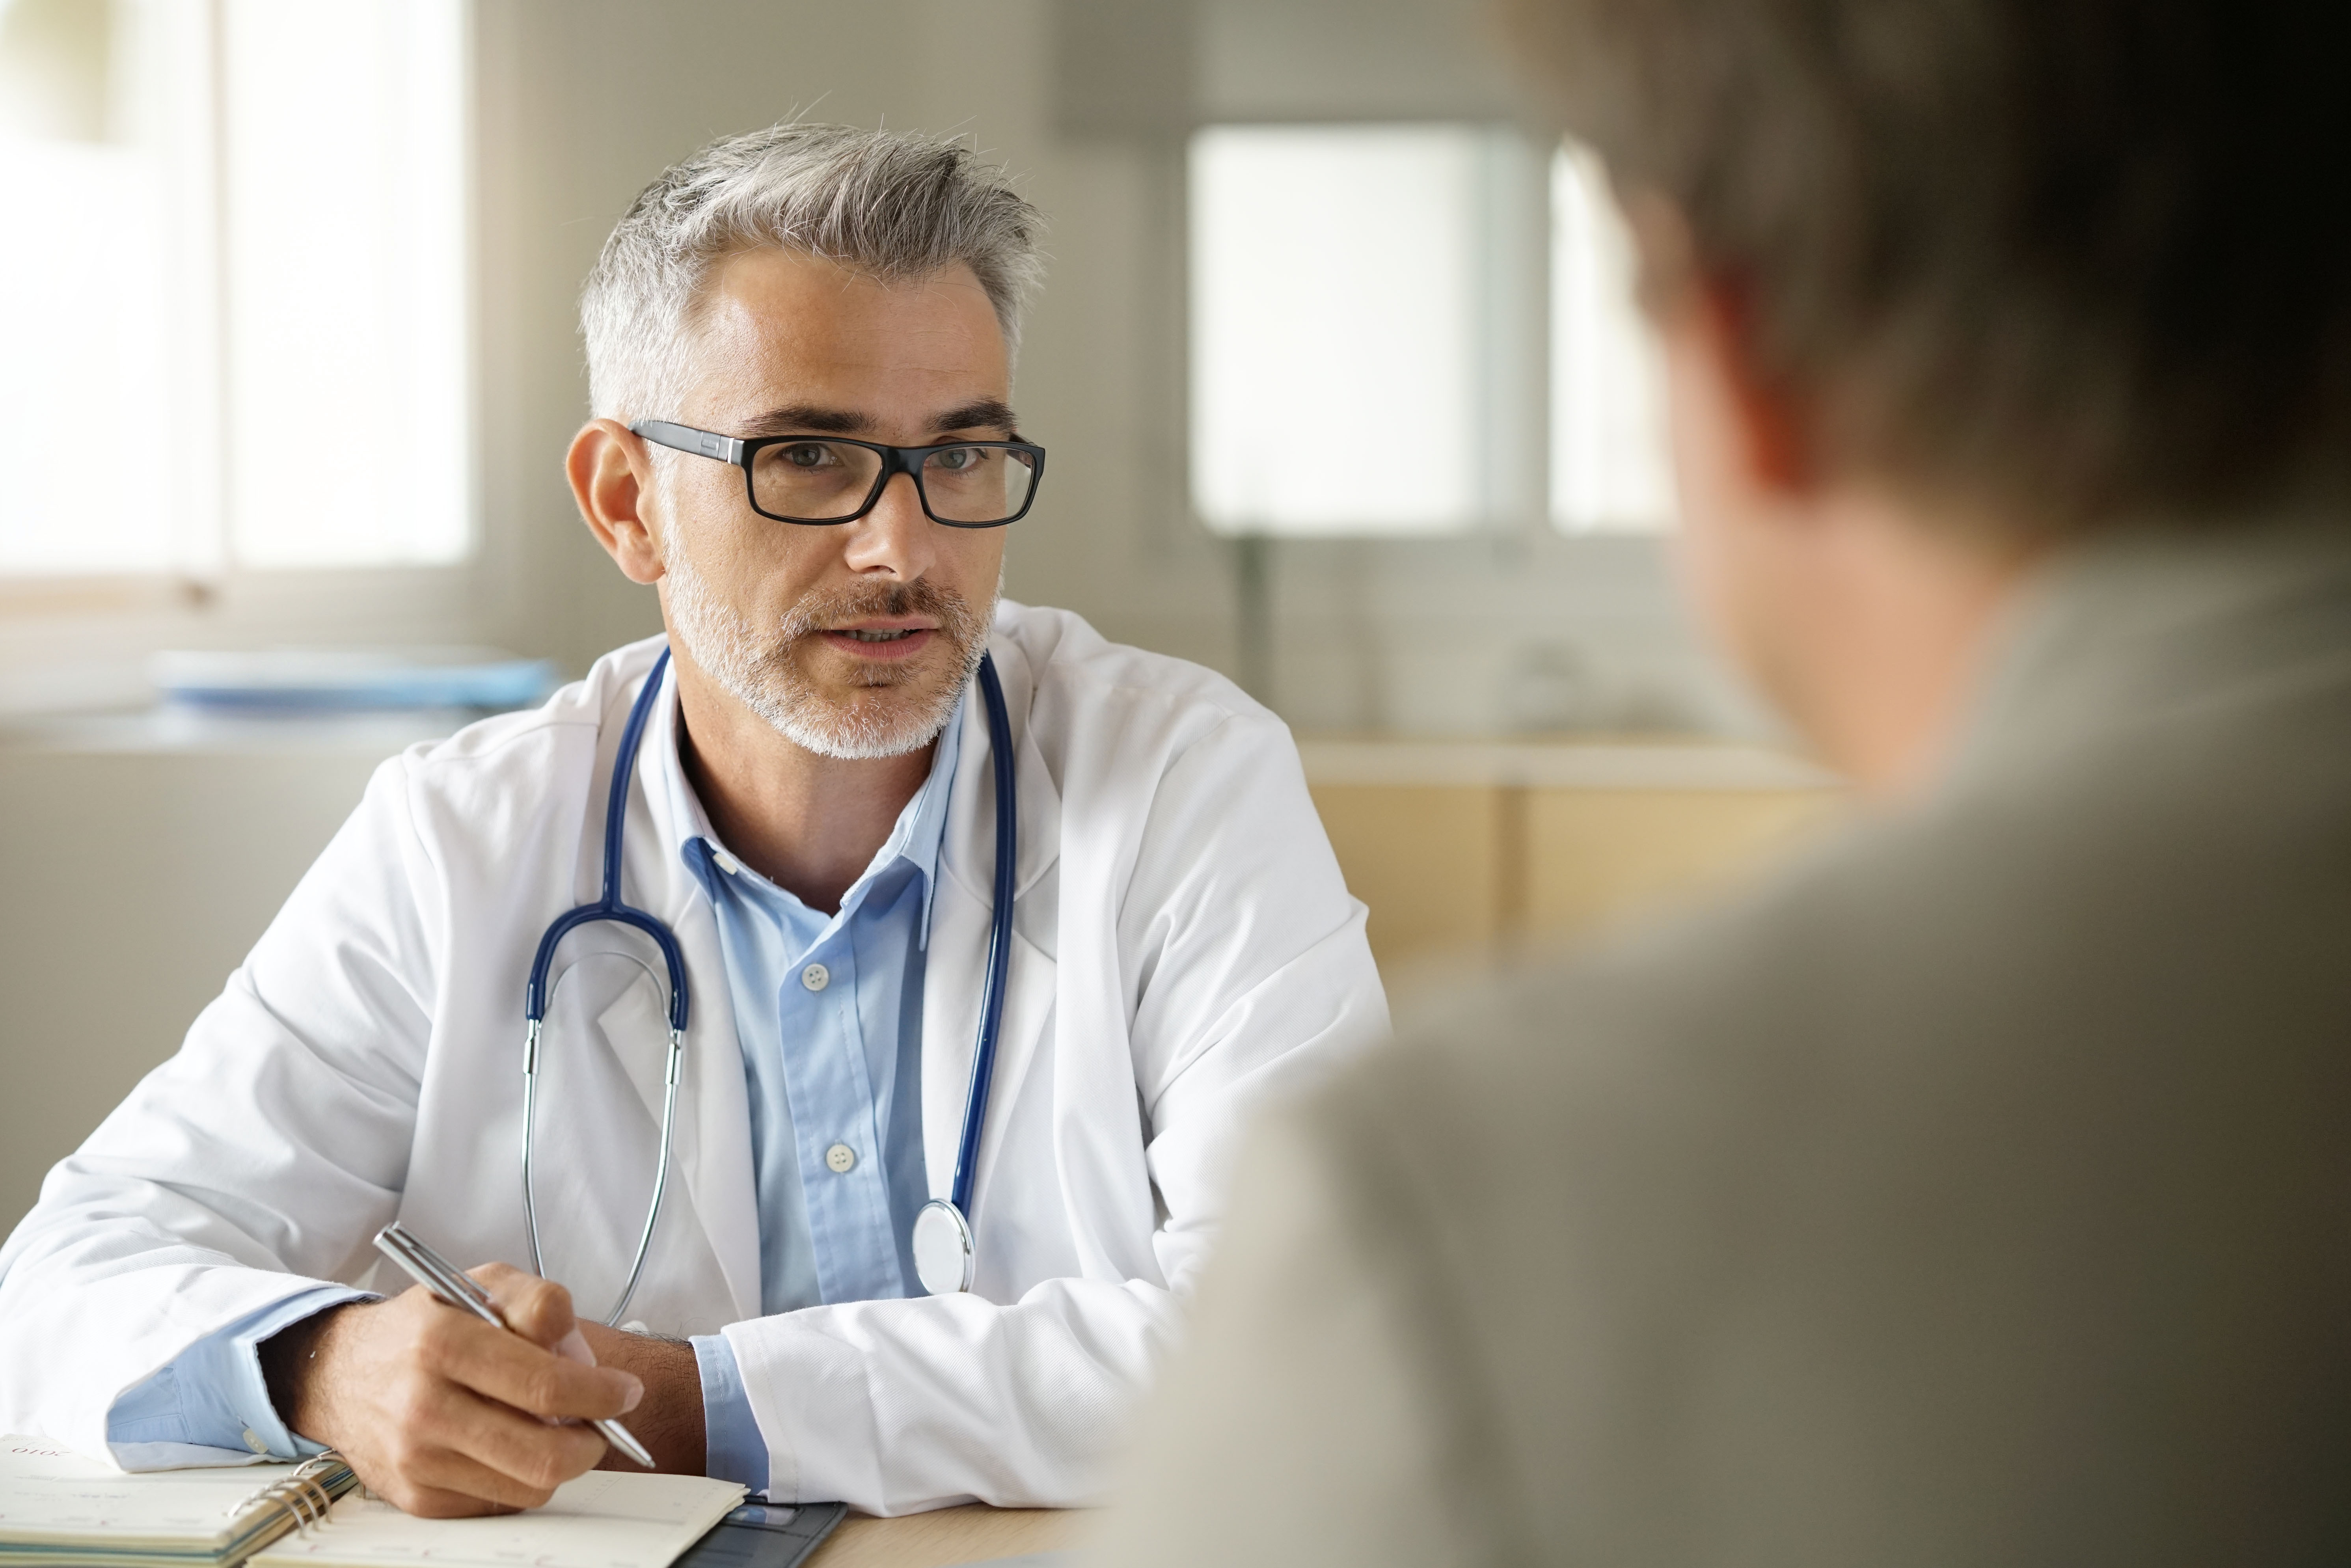 Doctor talking to patient | Source: Shutterstock